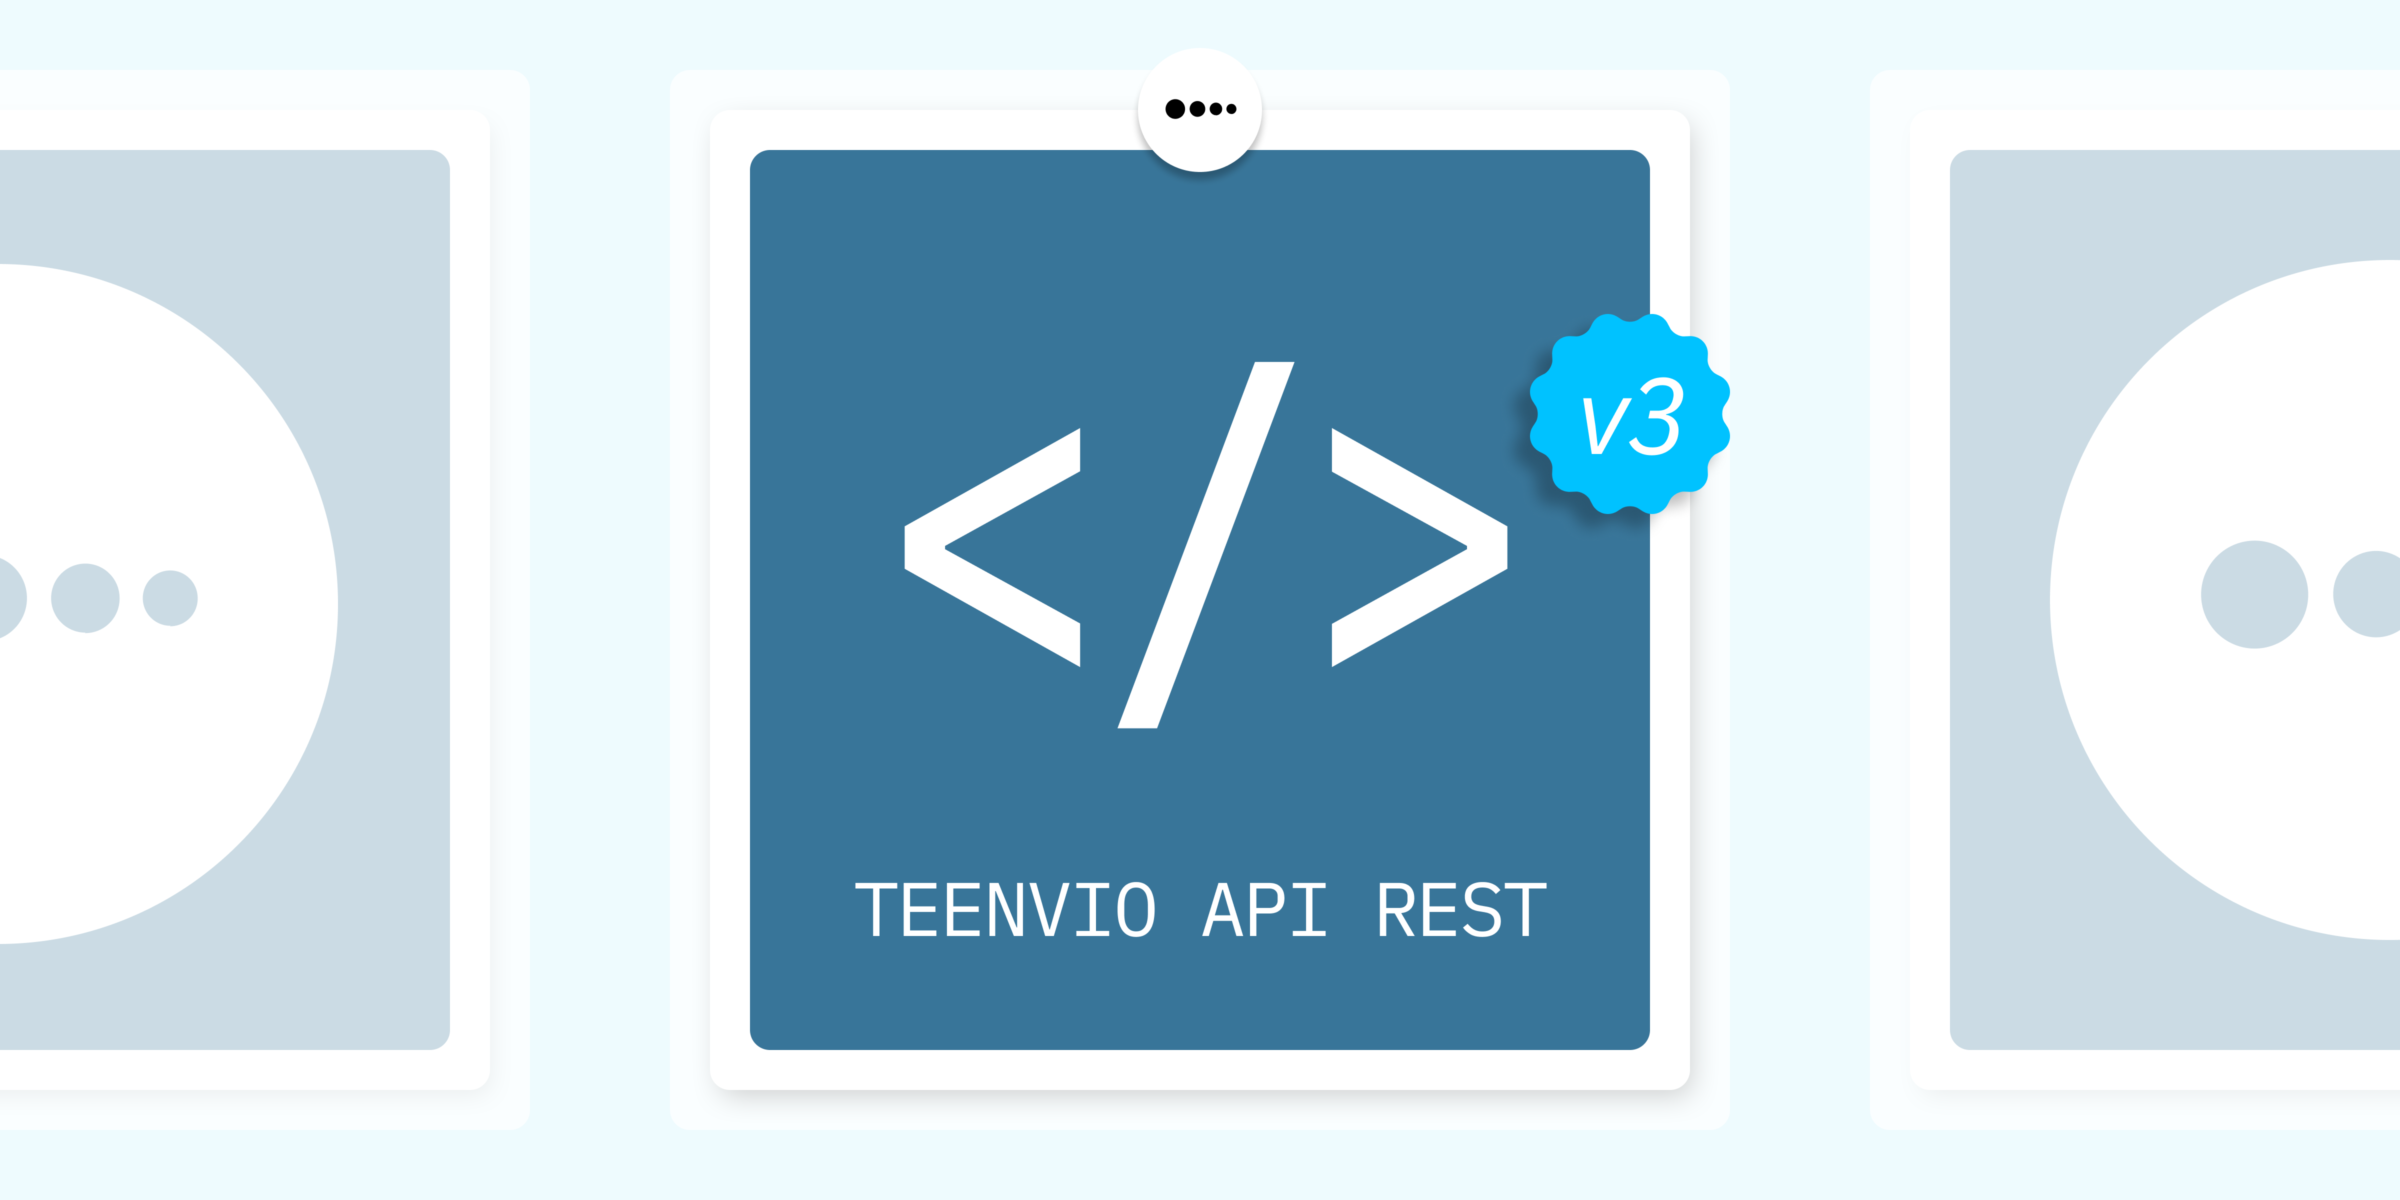 Teenvio API REST V3